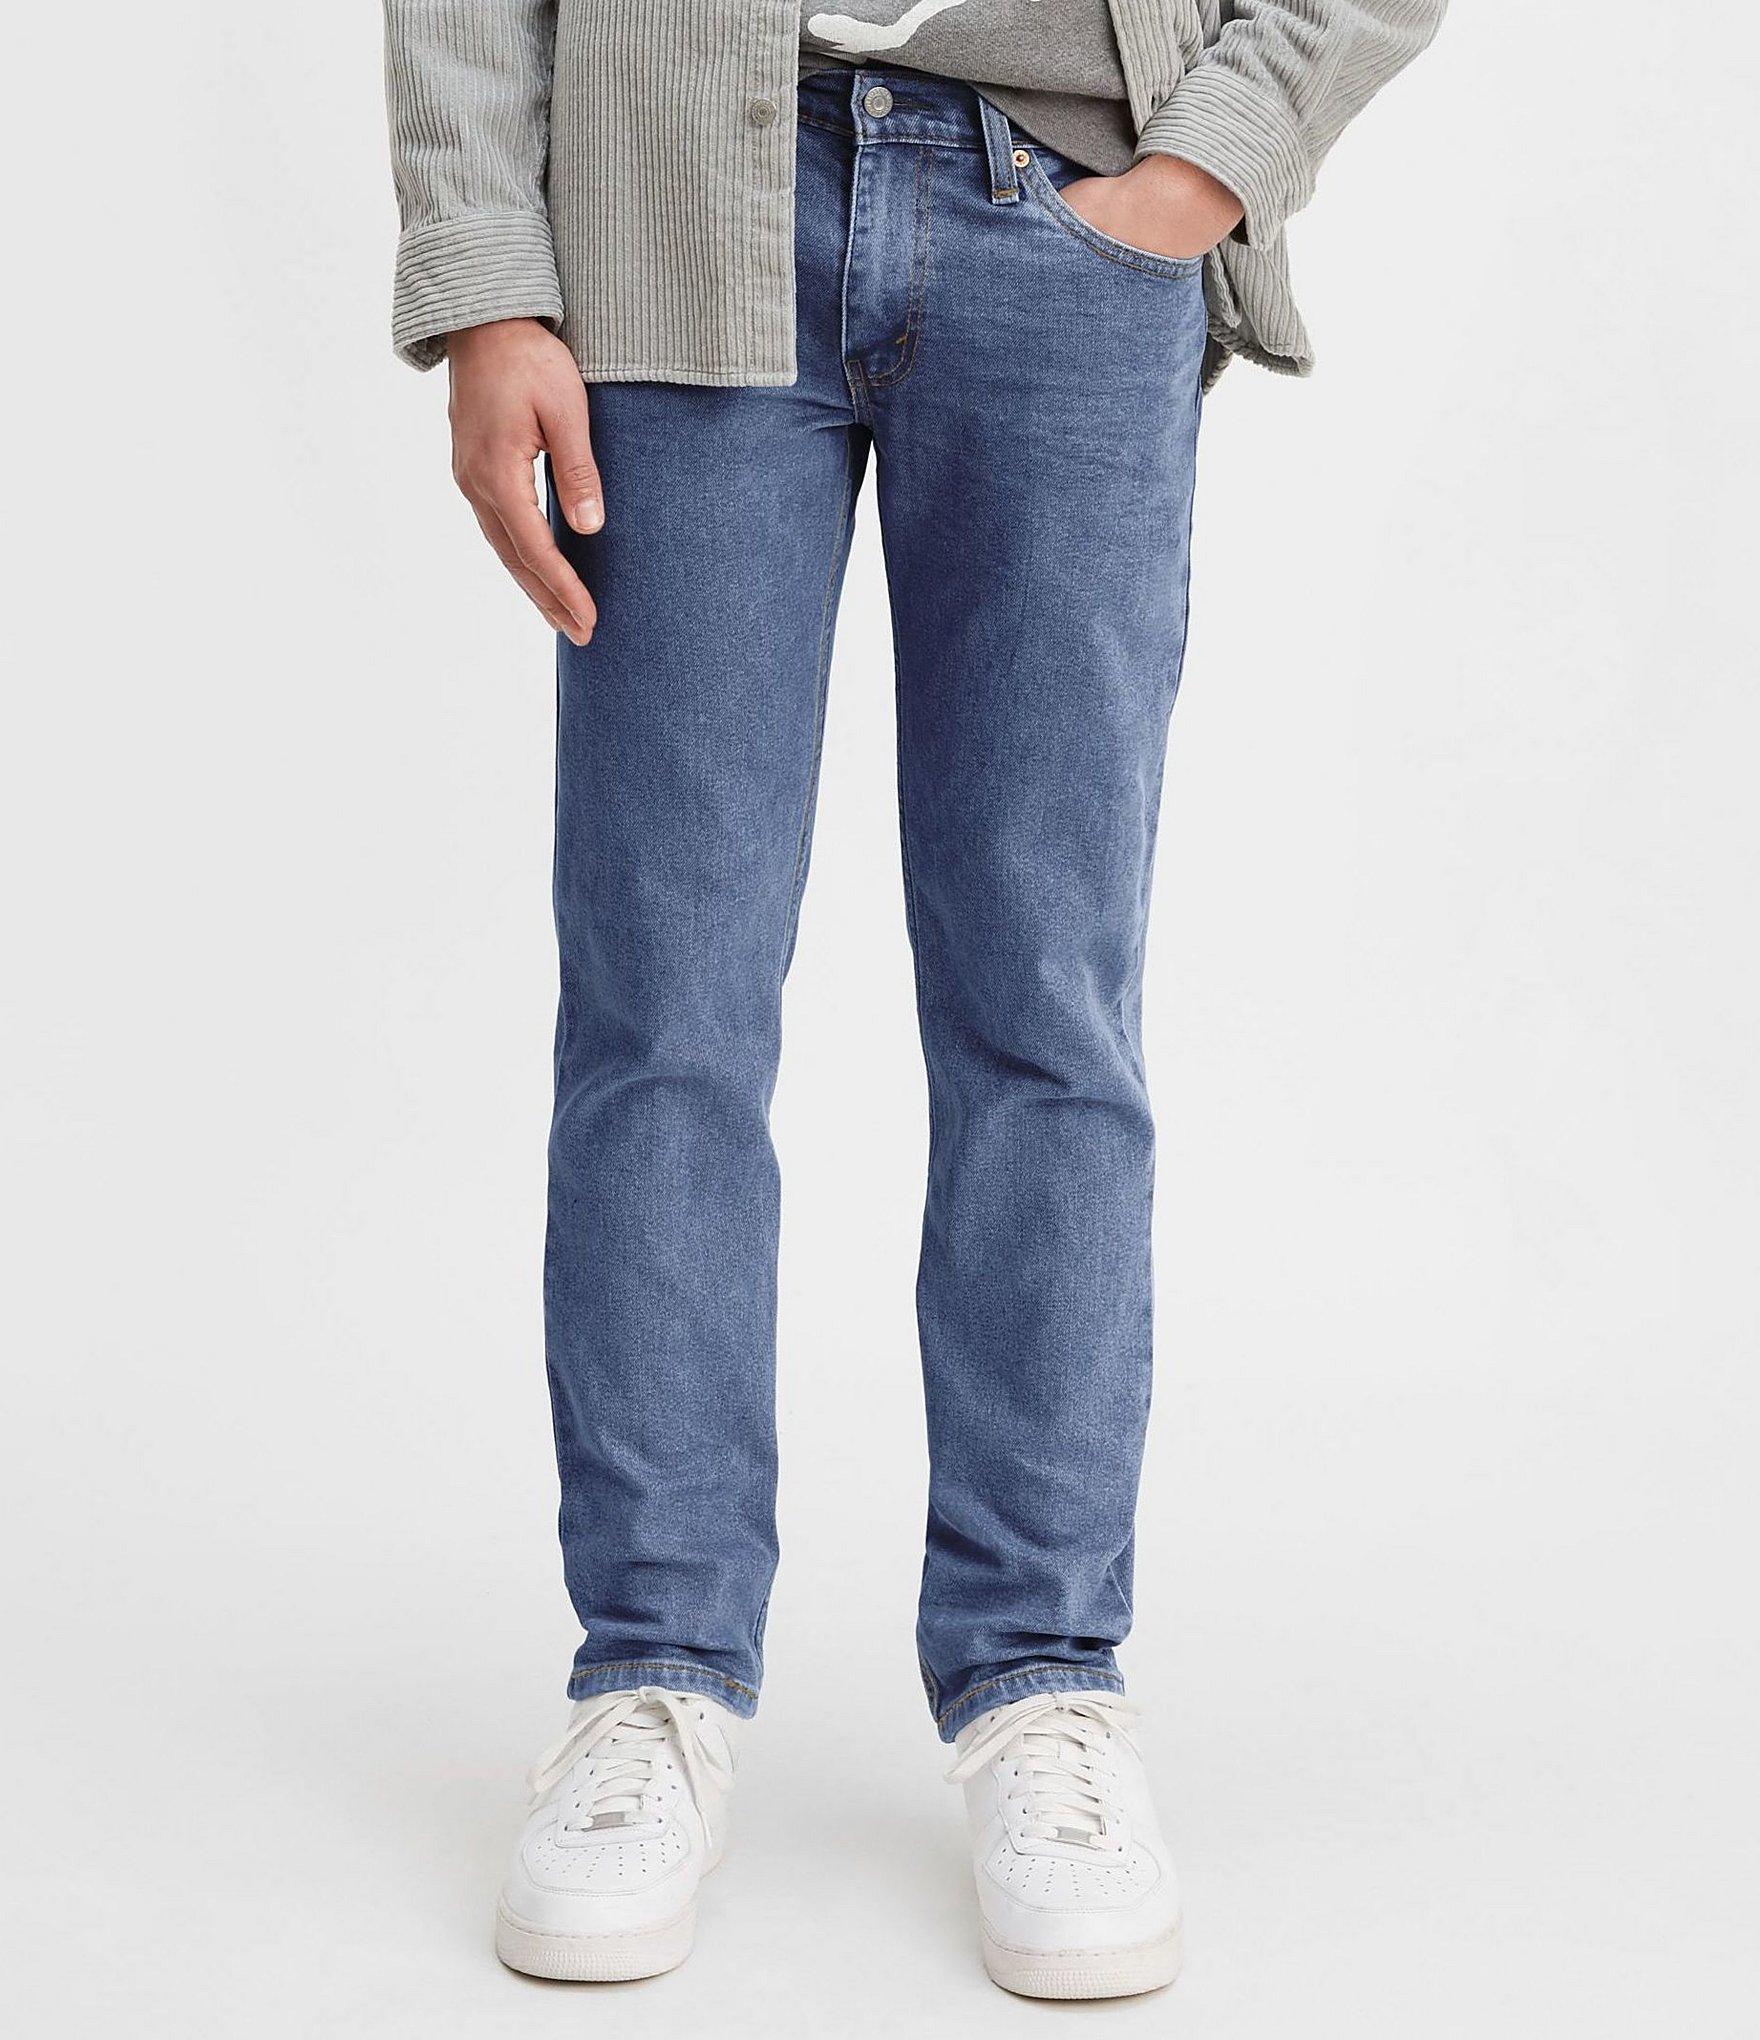 dillards mens jeans on sale